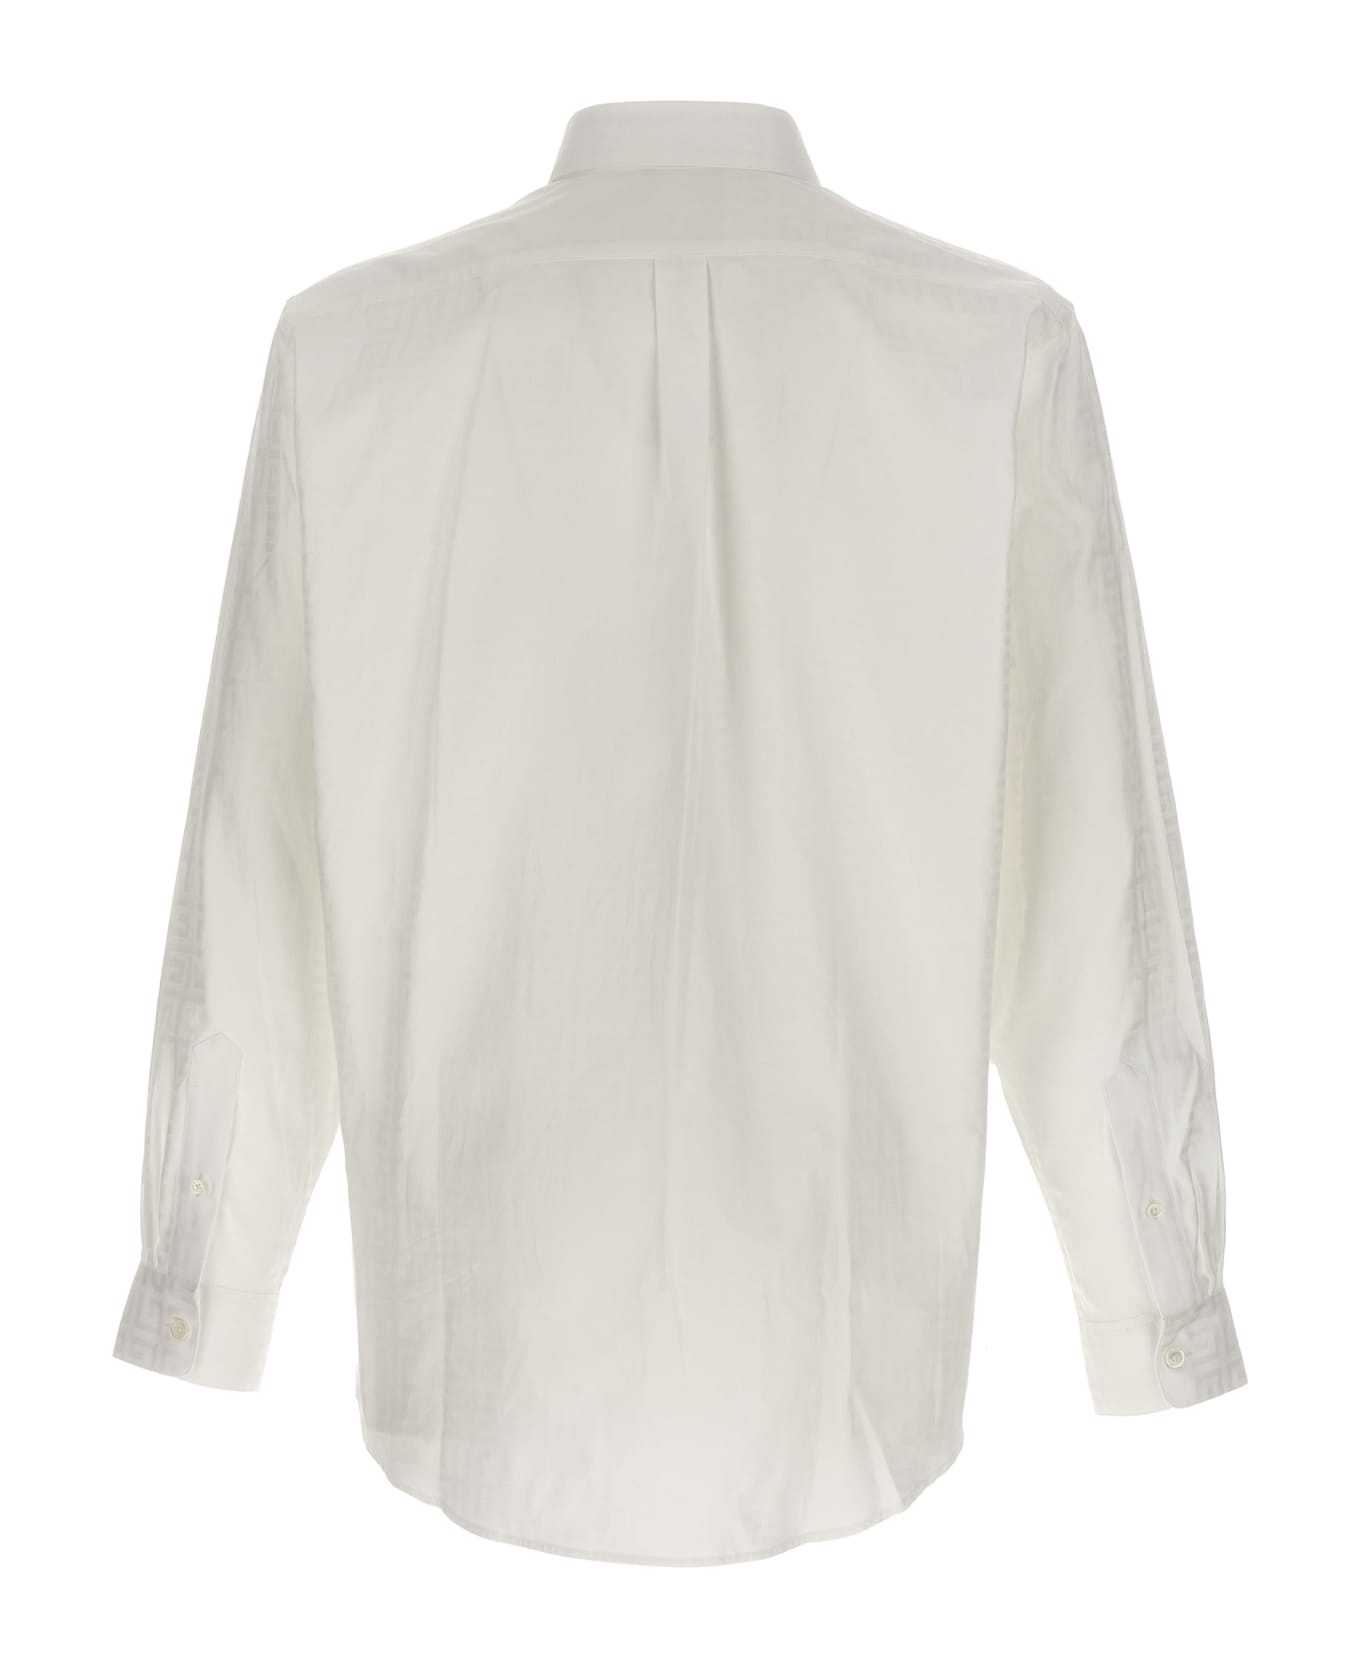 Givenchy Shirt In White Cotton - white